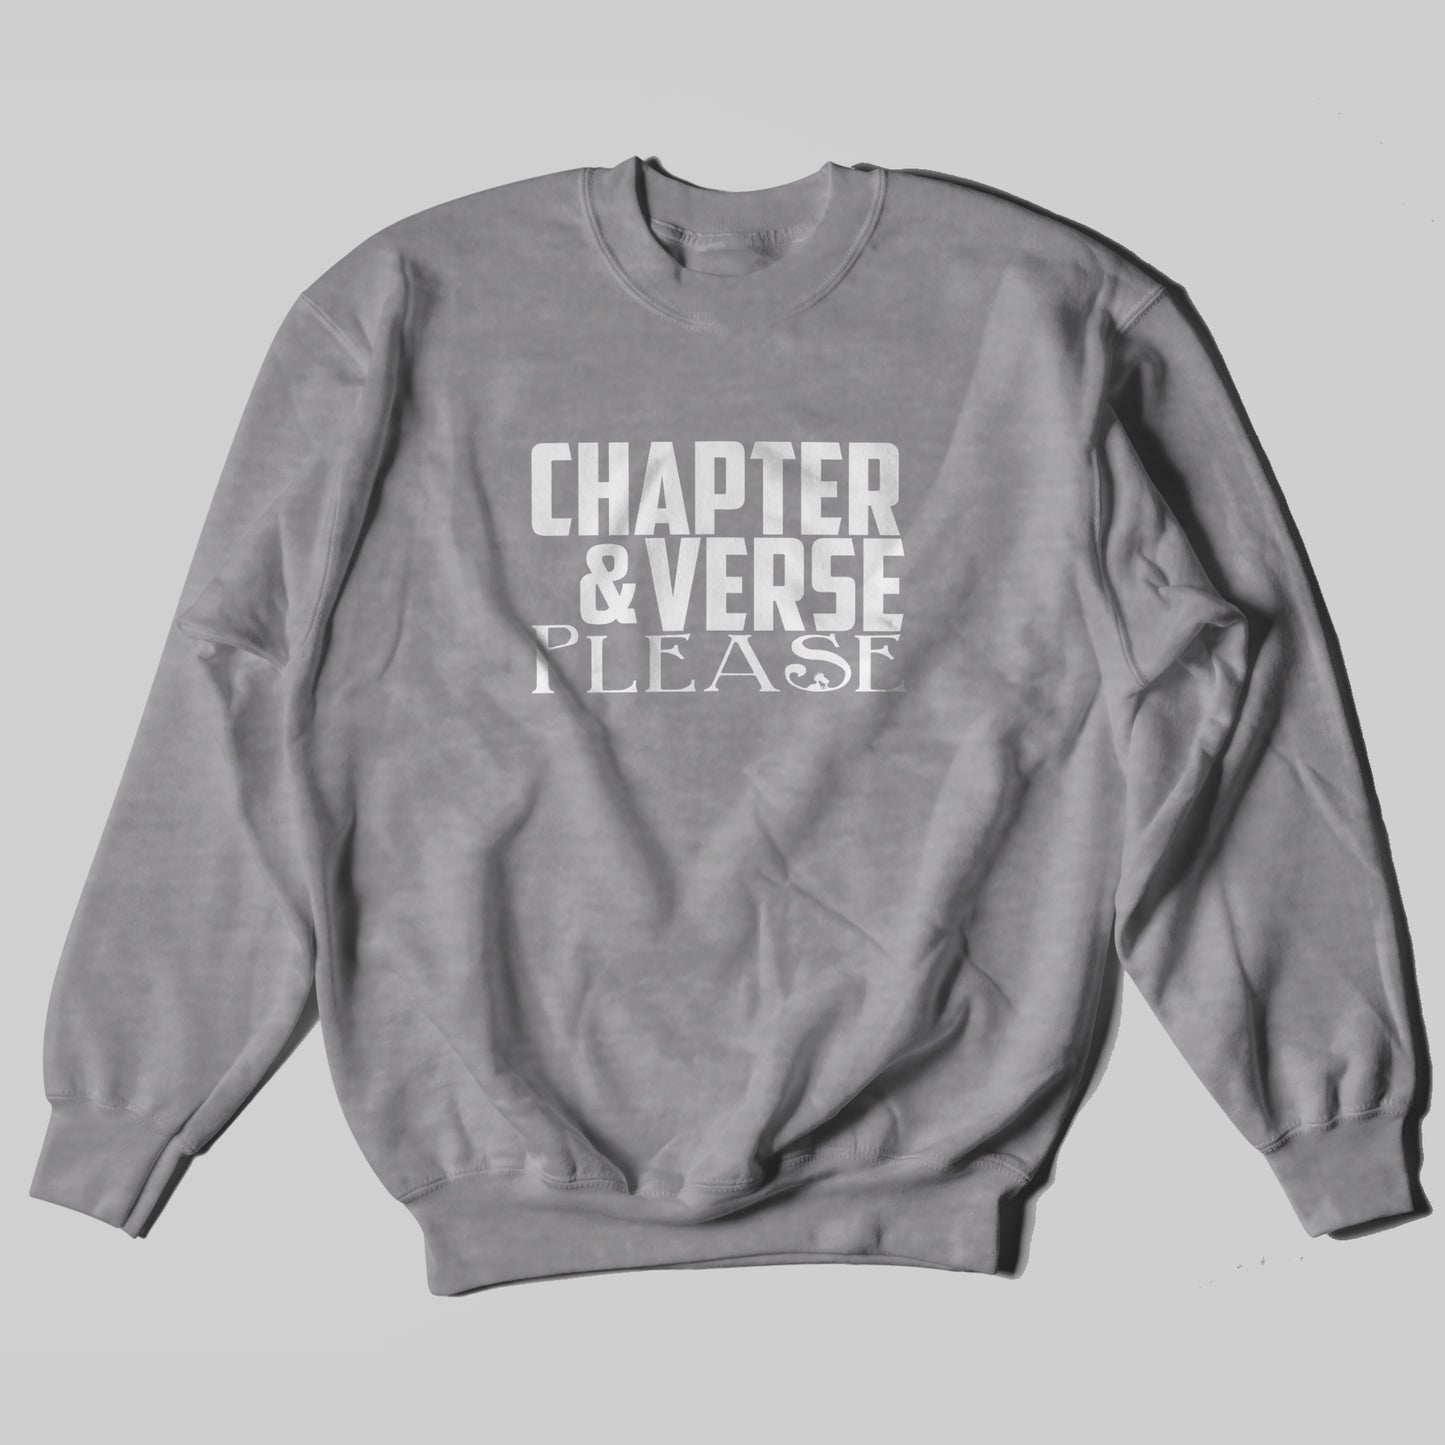 Chapter & Verse, Please - Sweatshirt